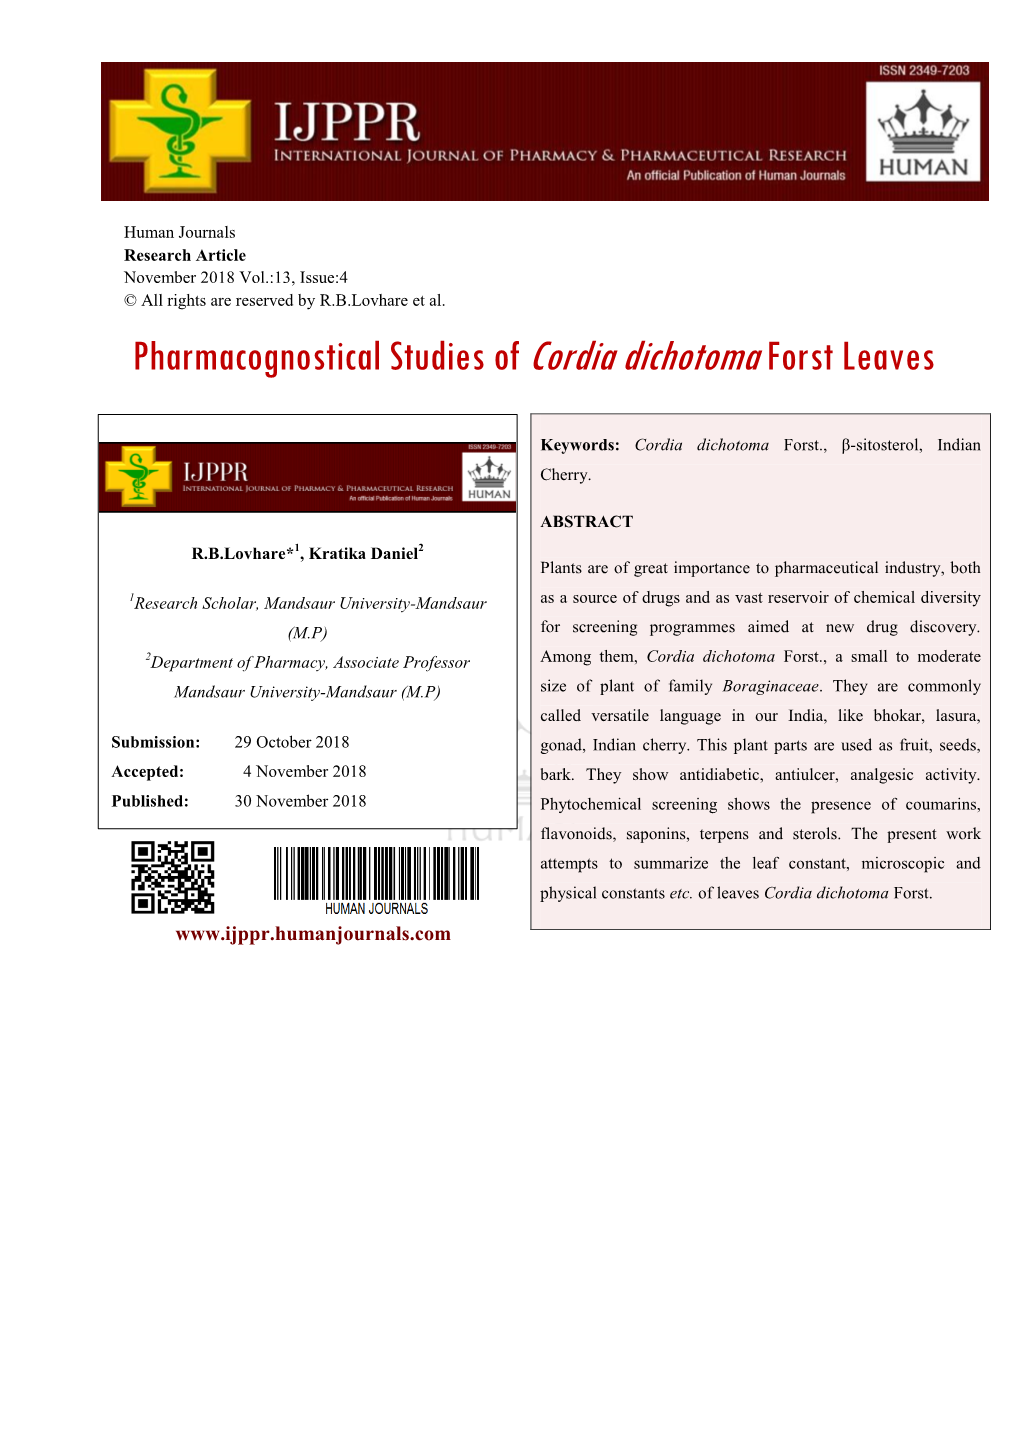 Pharmacognostical Studies of Cordia Dichotomaforst Leaves